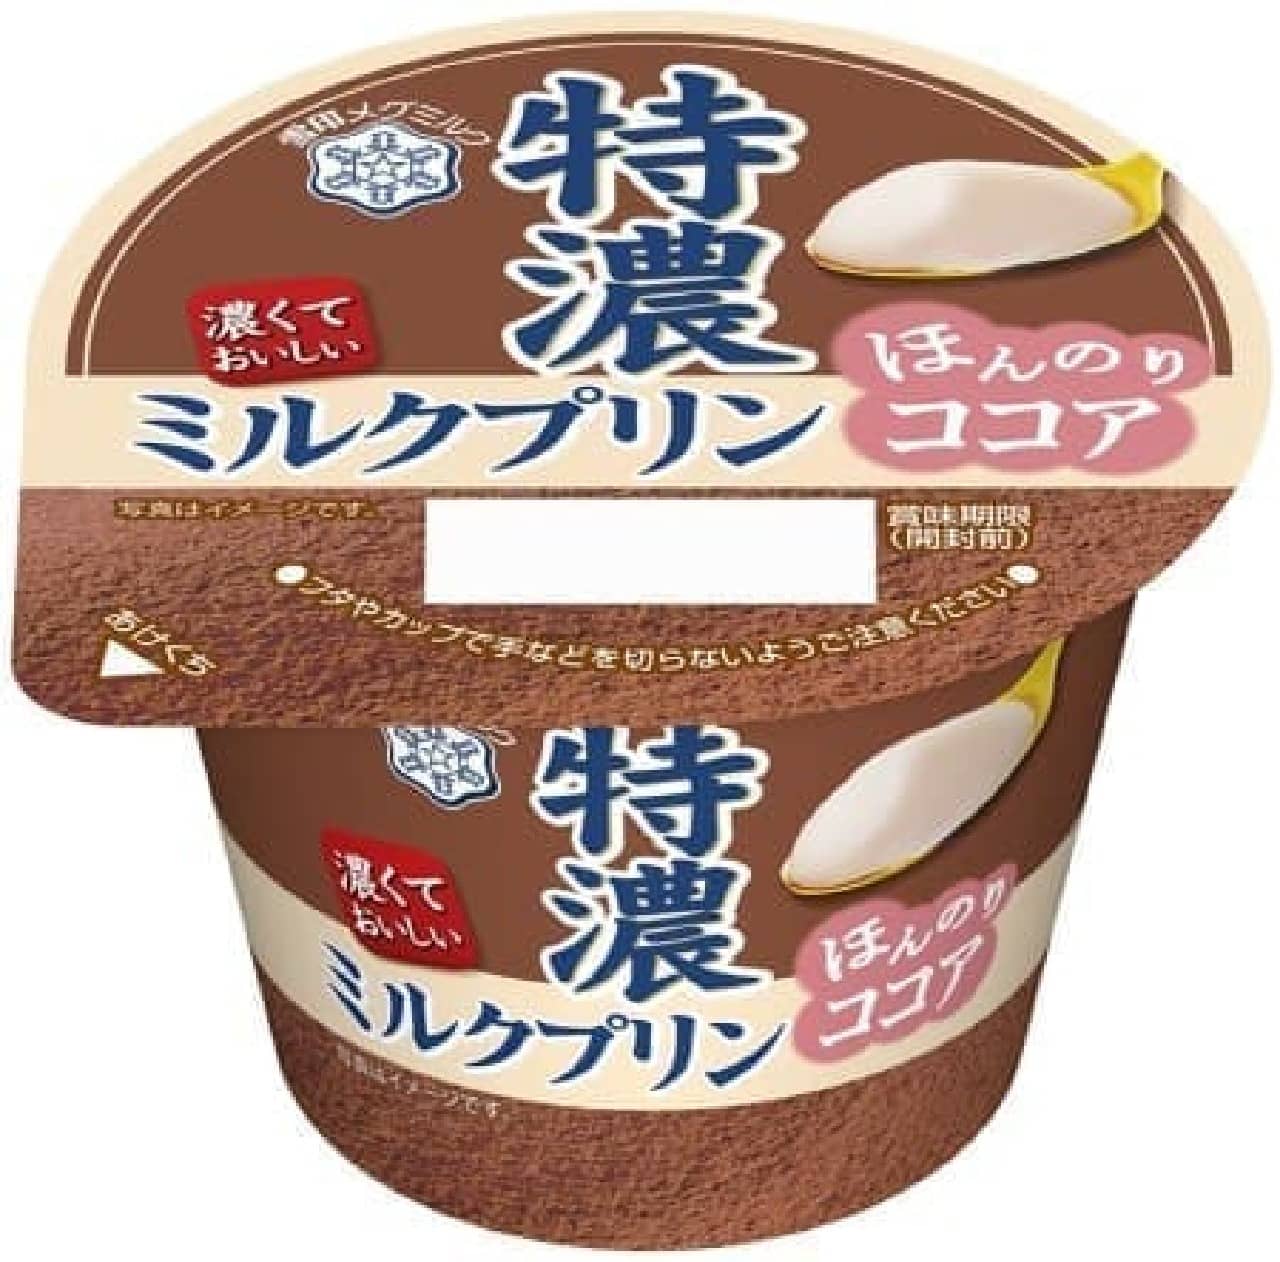 Snow Brand Megmilk "Tokuno Milk Pudding Slightly Cocoa"